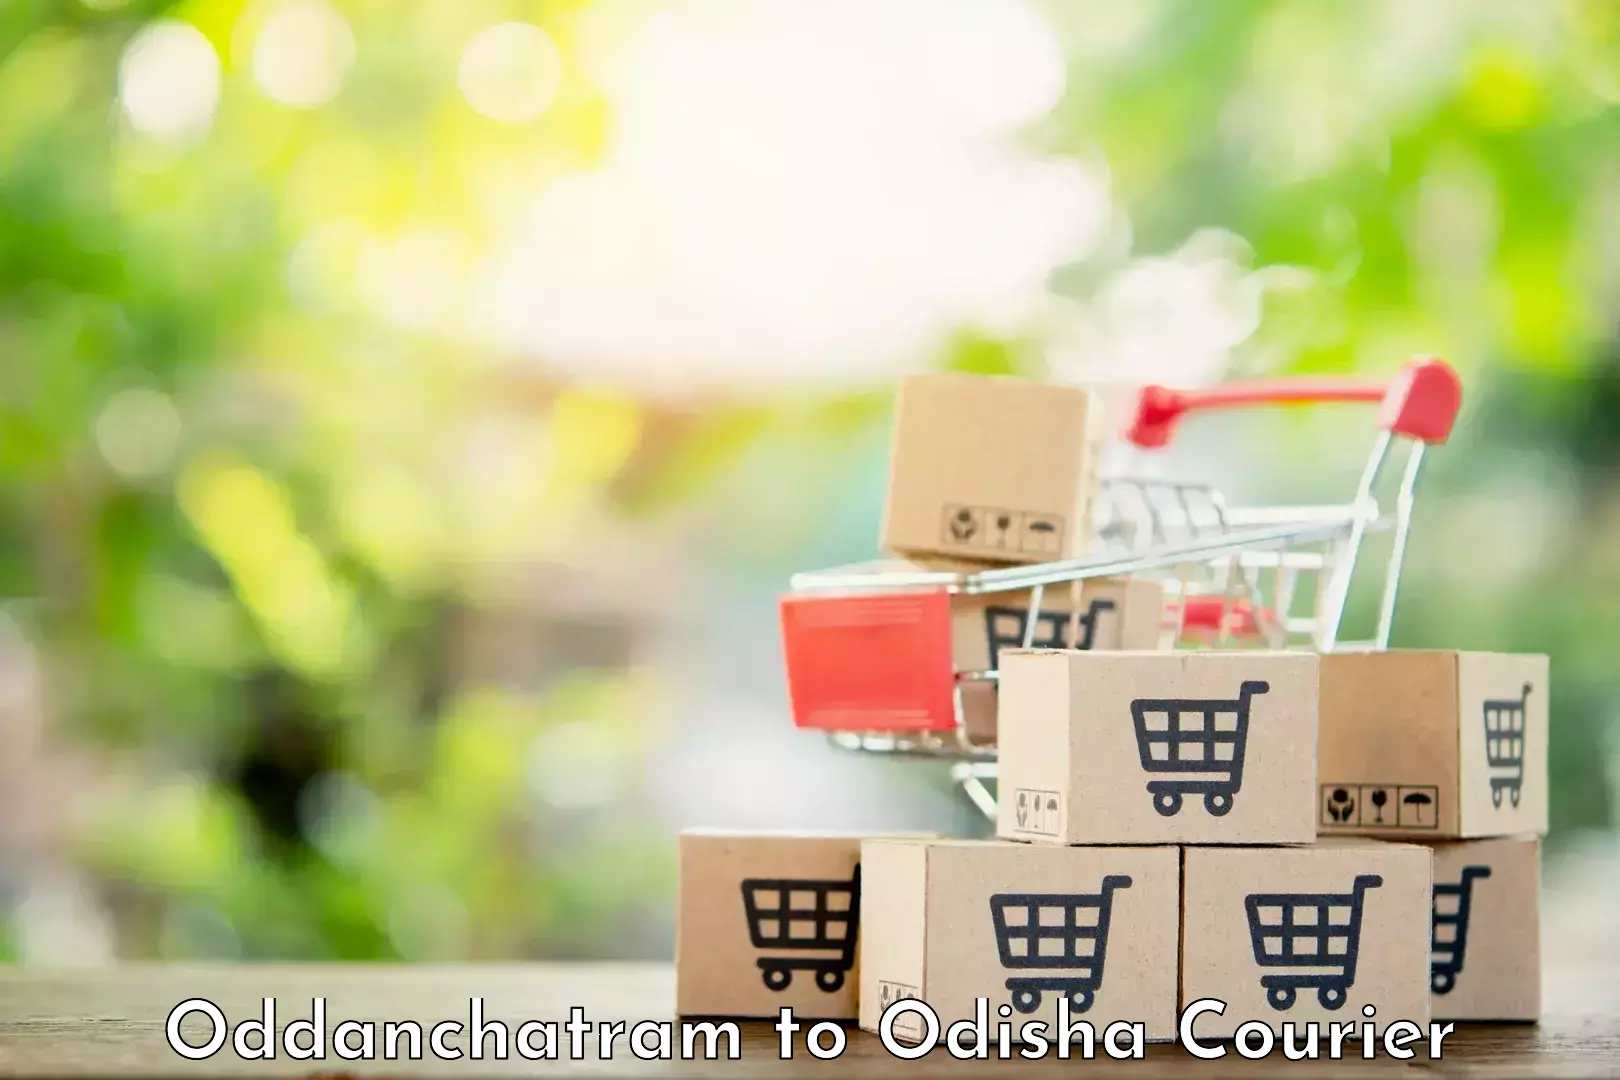 Advanced delivery network Oddanchatram to Odisha